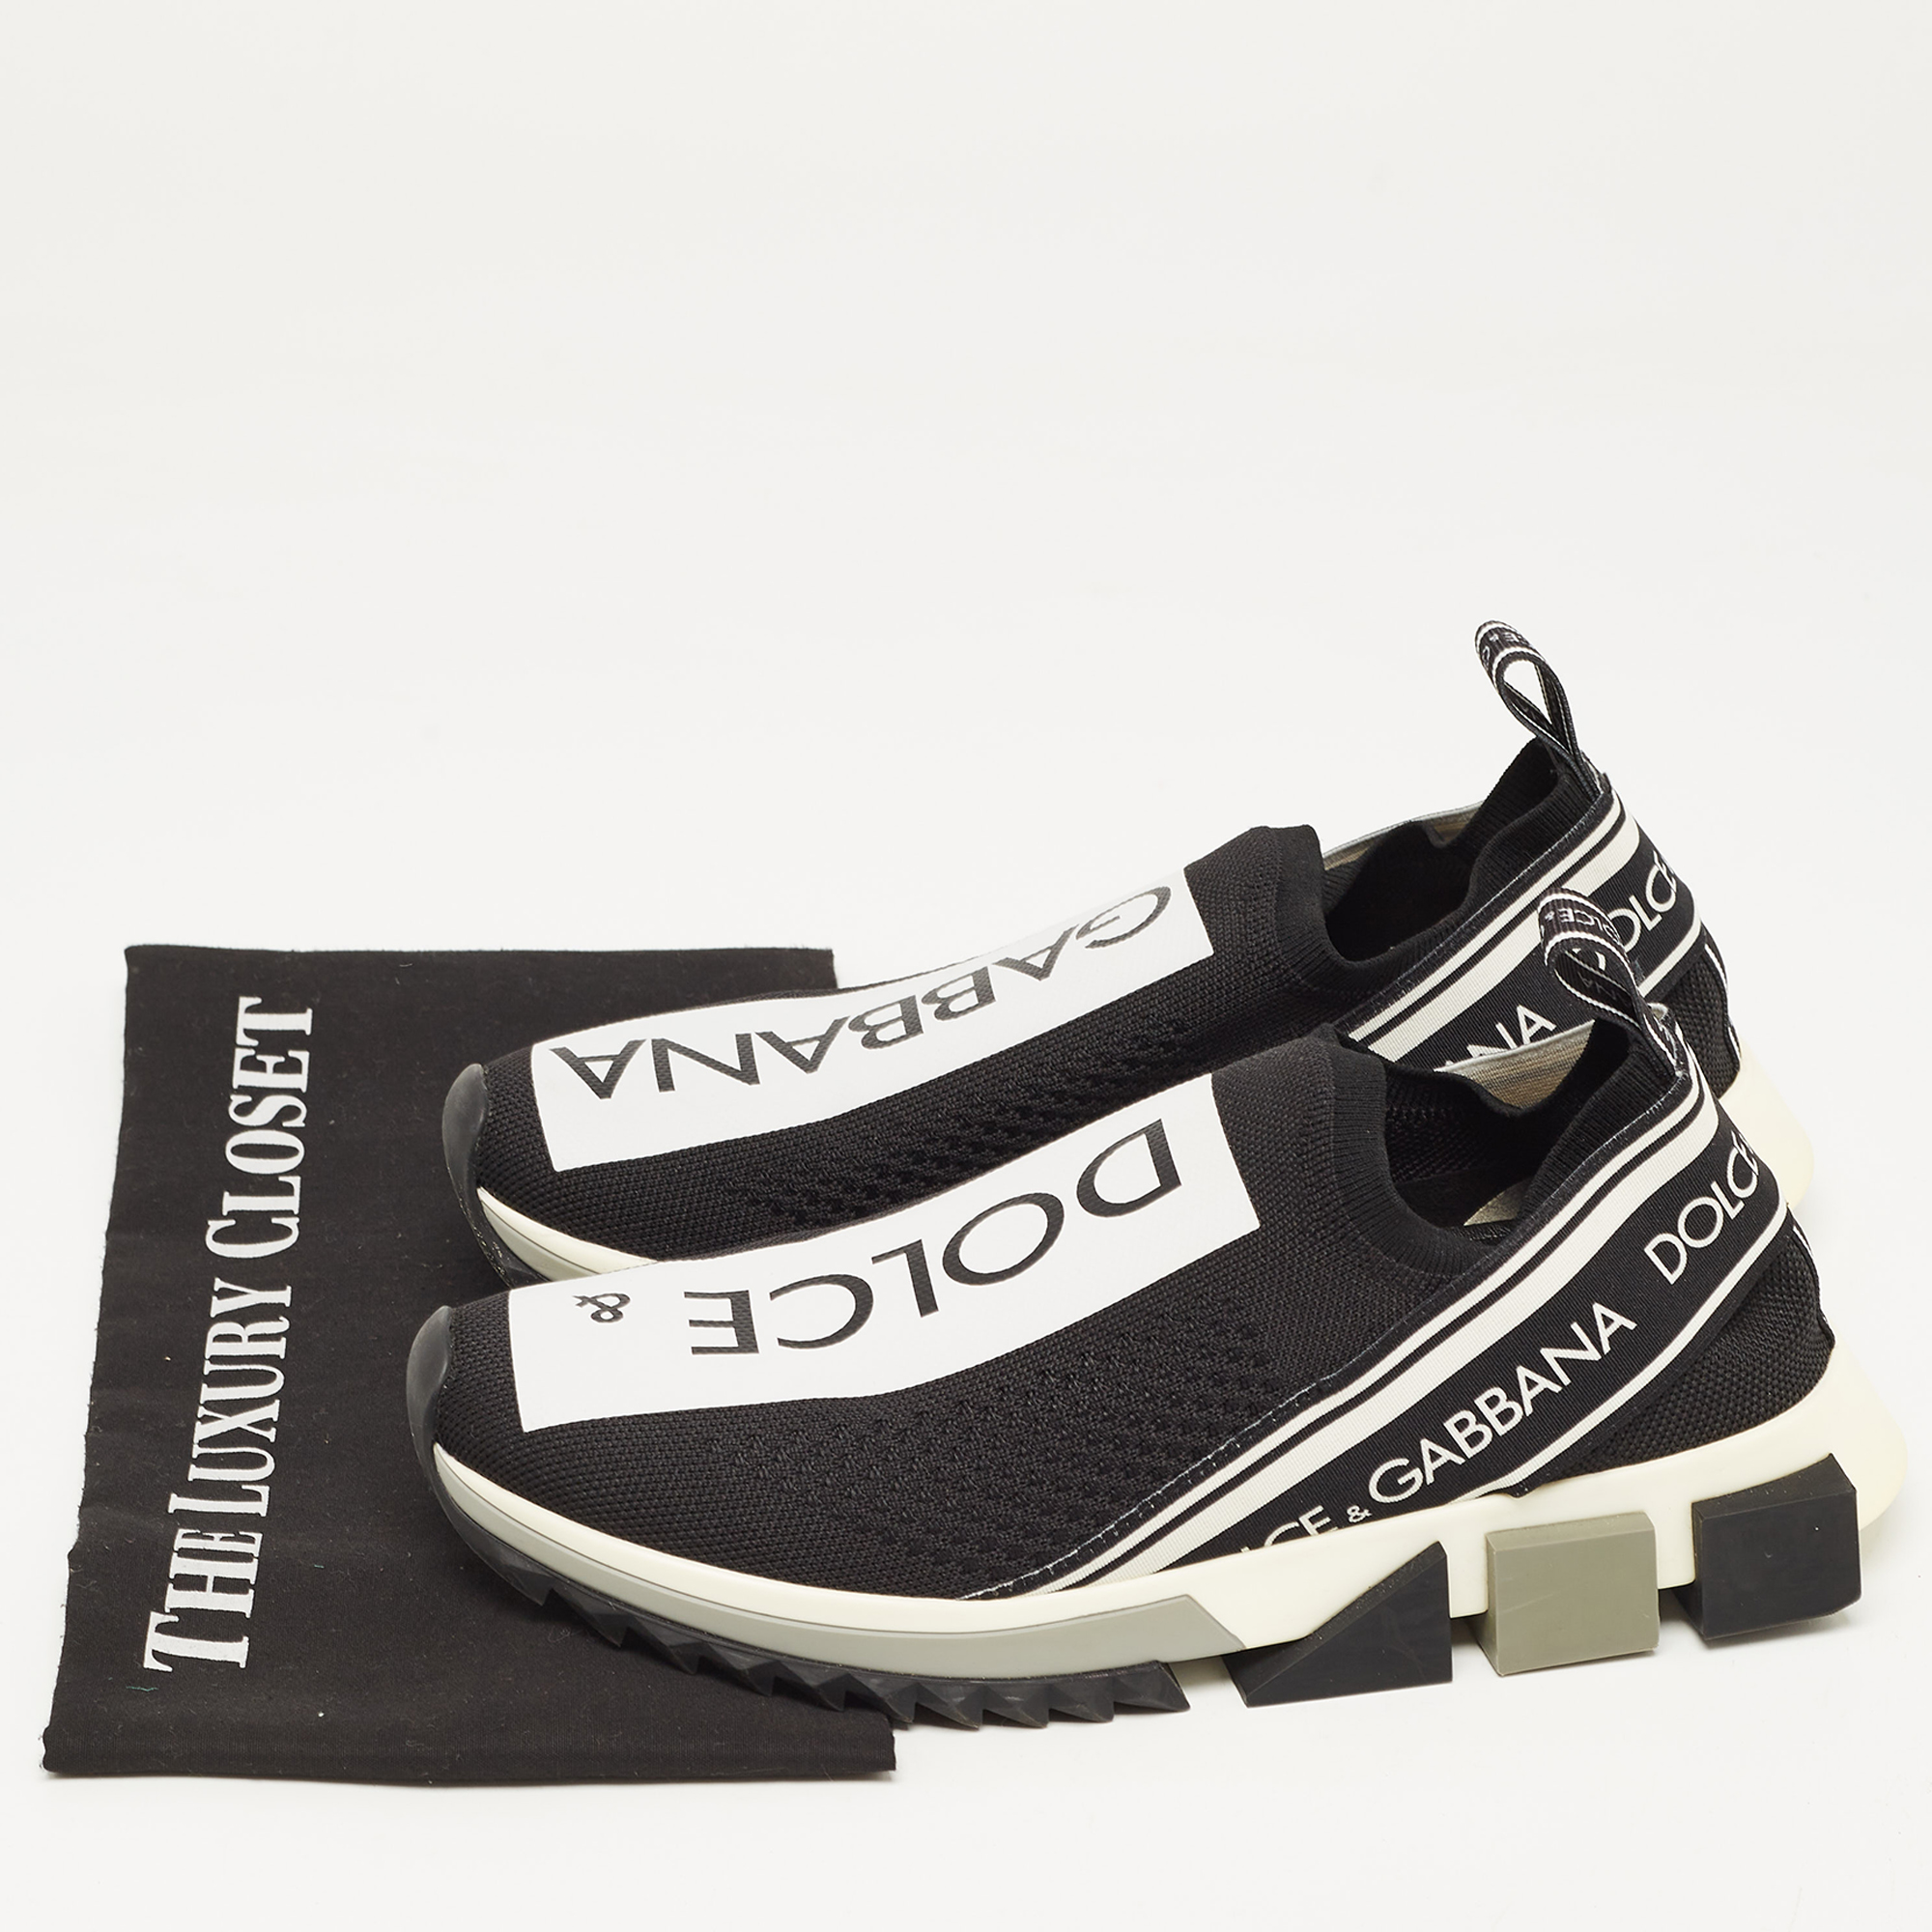 Dolce & Gabbana Black/White Logo Print Knit Fabric Sorrento Sneakers Size 39.5